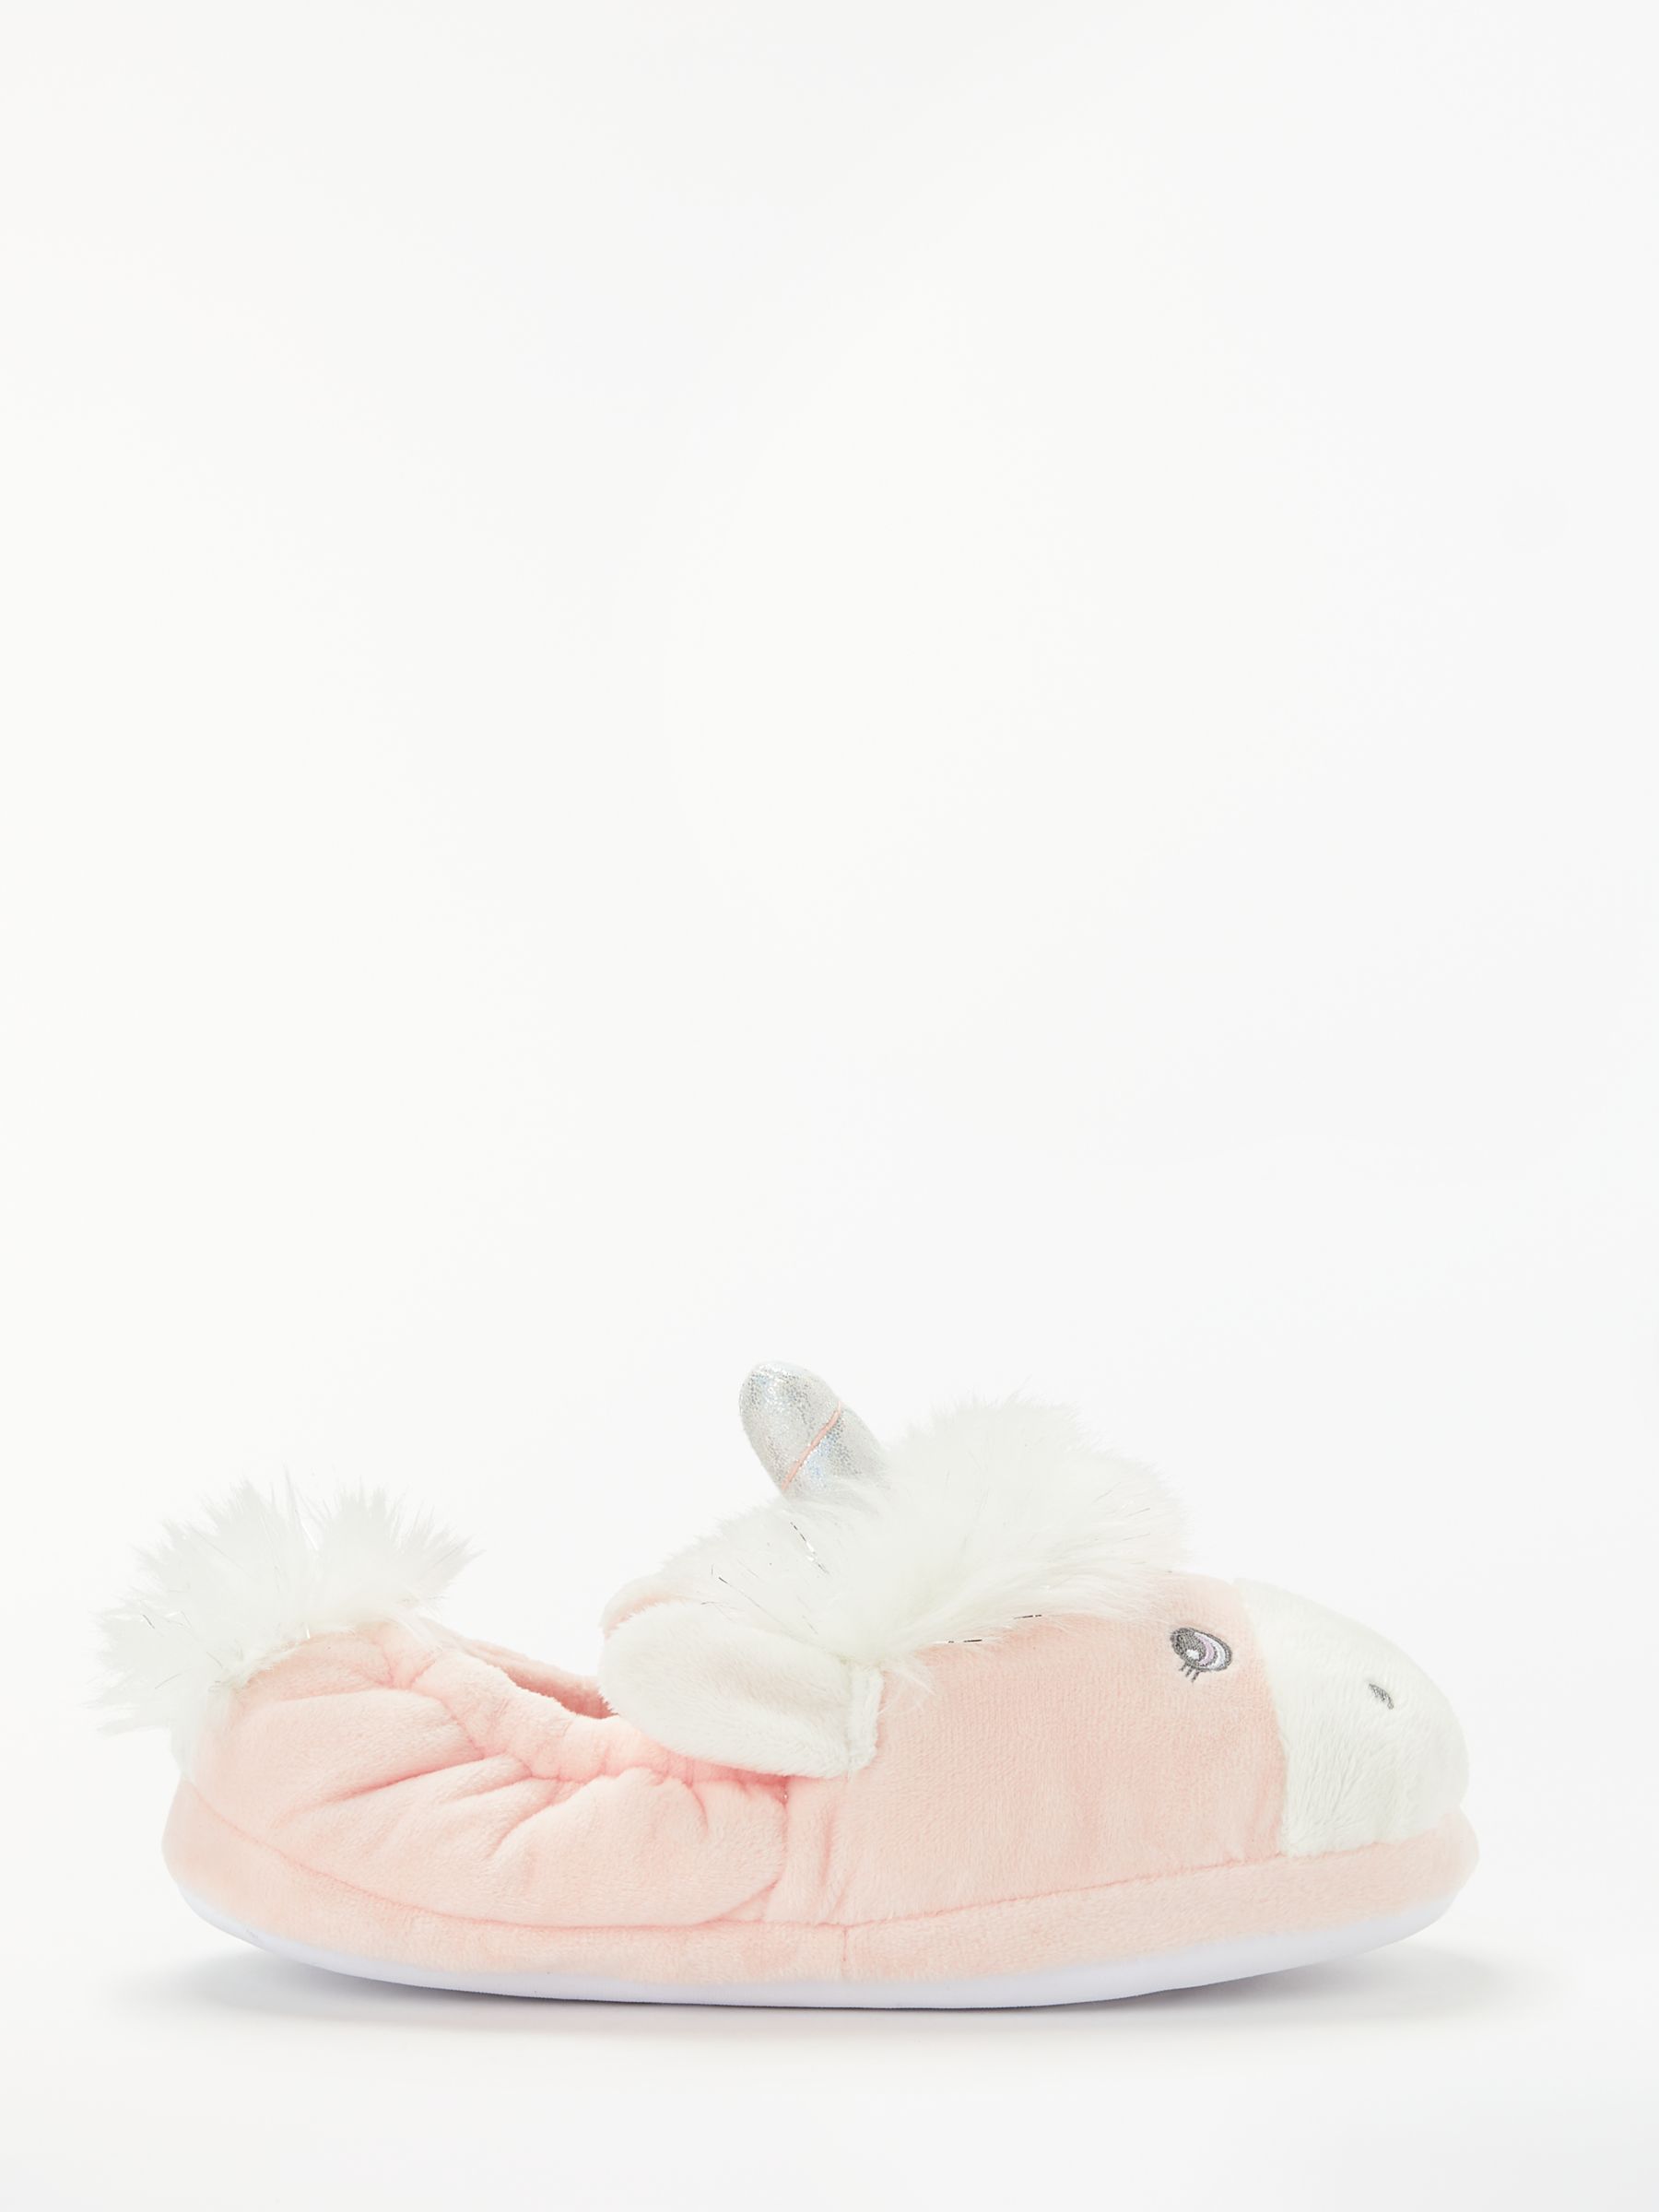 John Lewis & Partners Children's Unicorn Closed Back Slippers, Pink